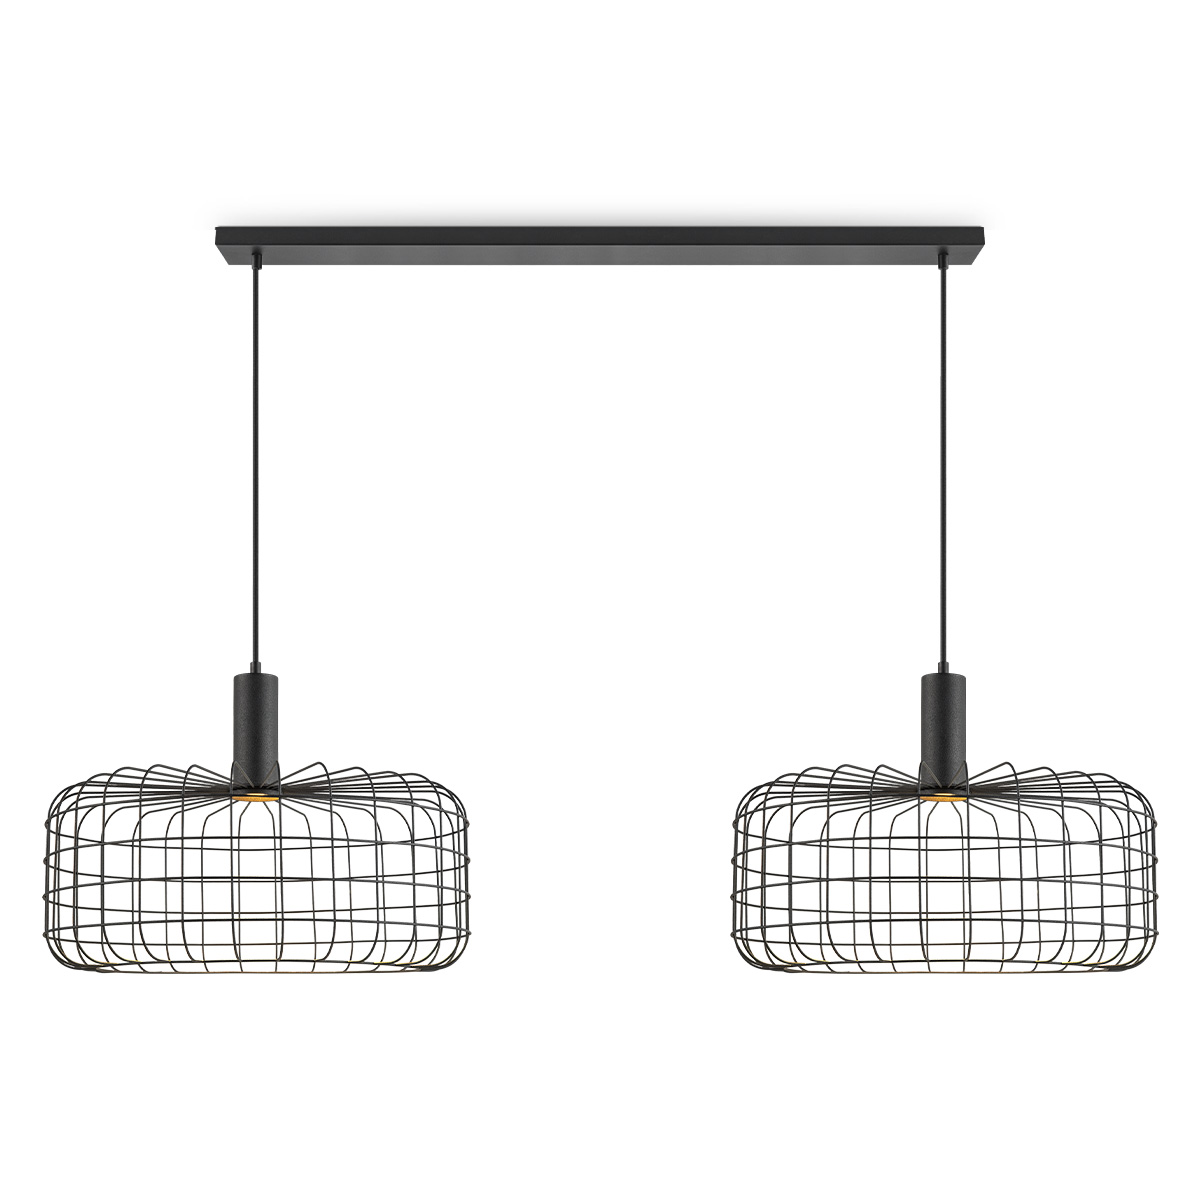 Tangla lighting - TLP7651-02BK - LED pendant lamp 2 lights - metal decorative lighting - industrial netting series - large